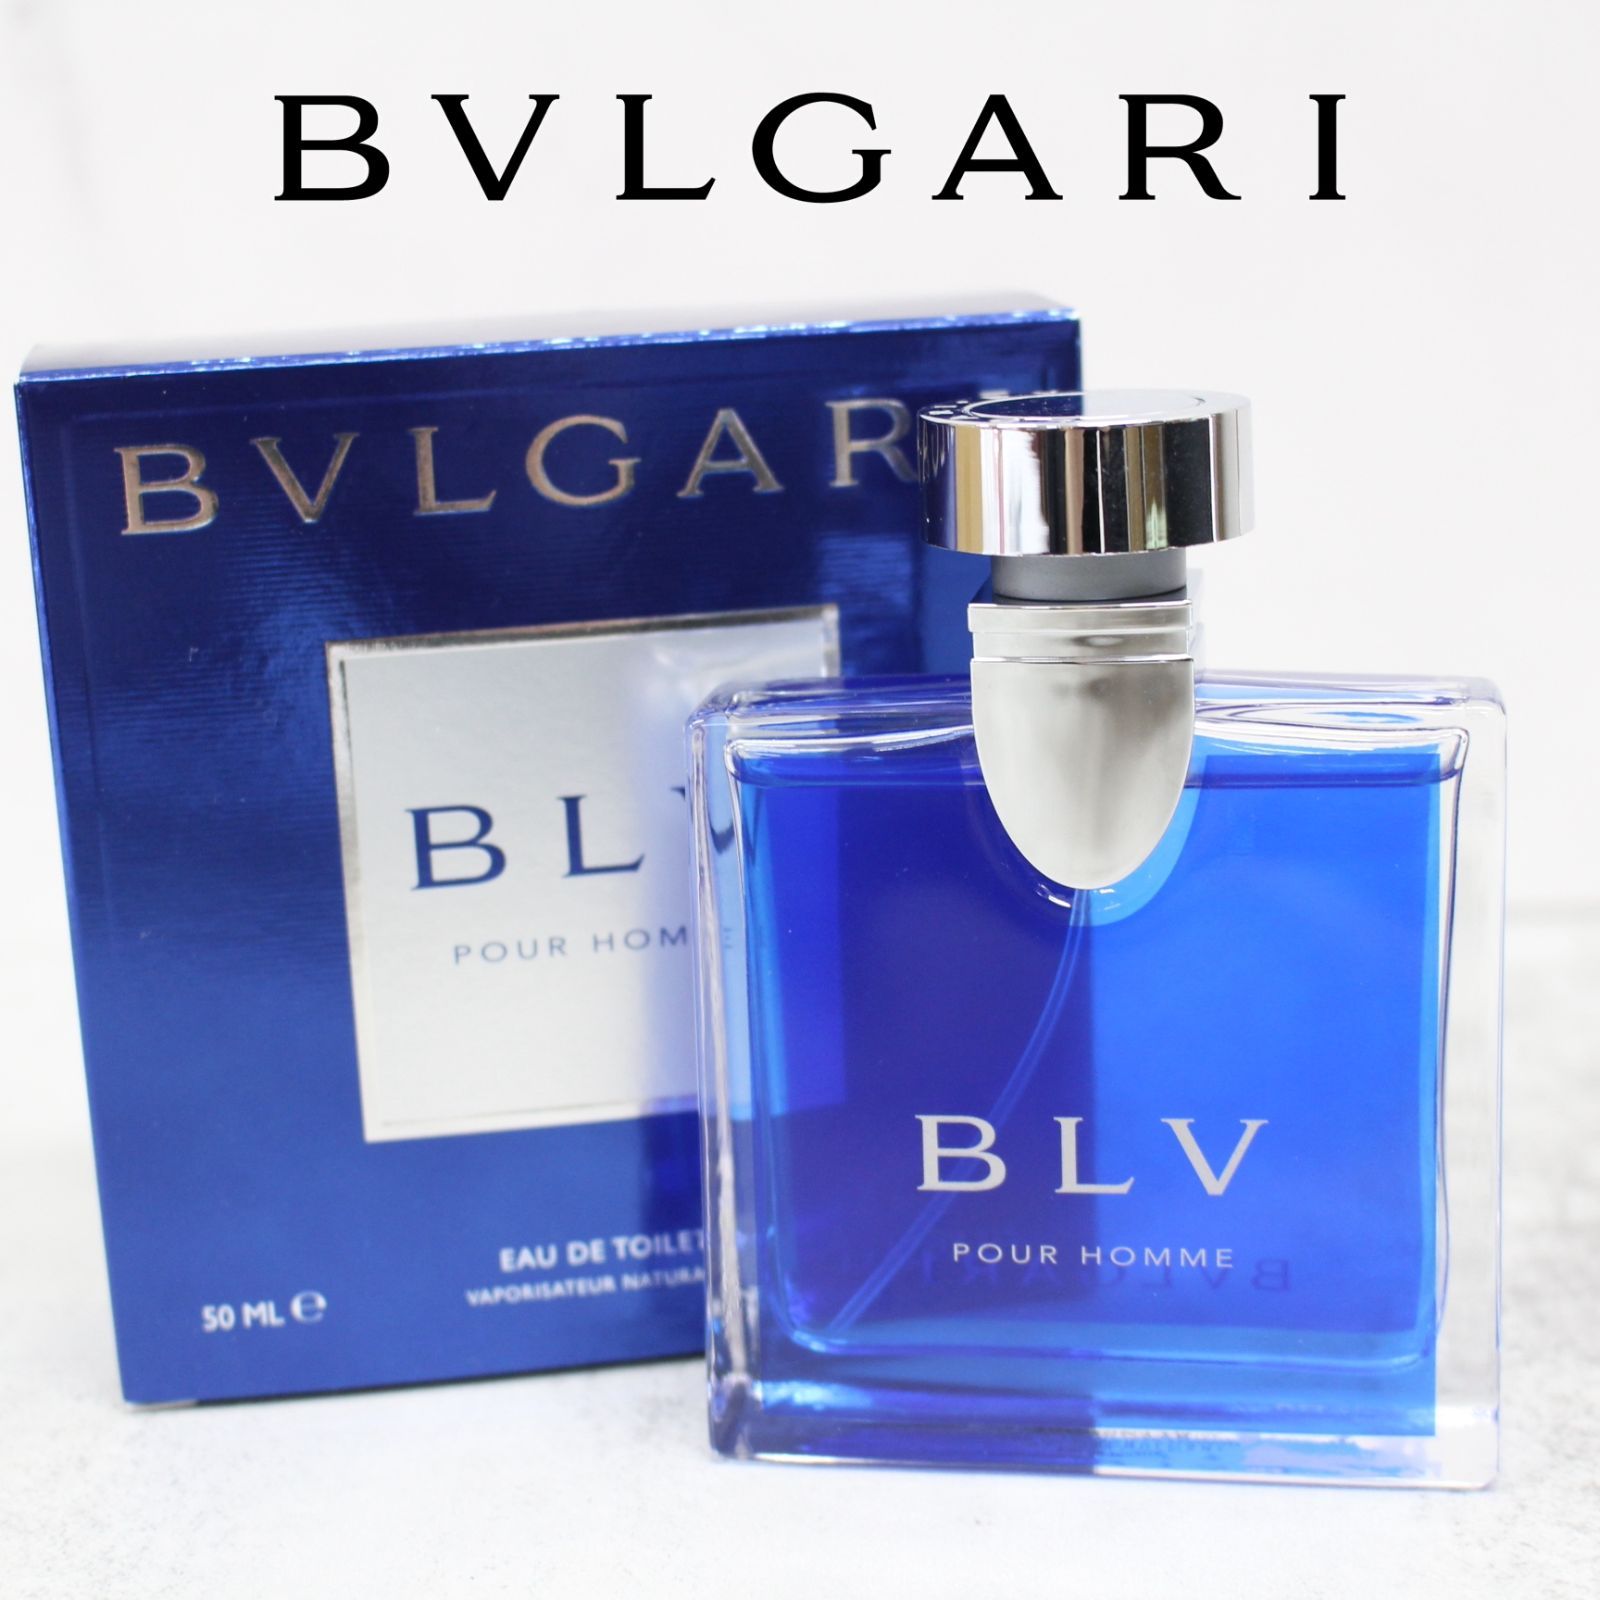 S019)【美品/残量9割】BVLGARI BLV POUR HOMME EDT 50ml 香水